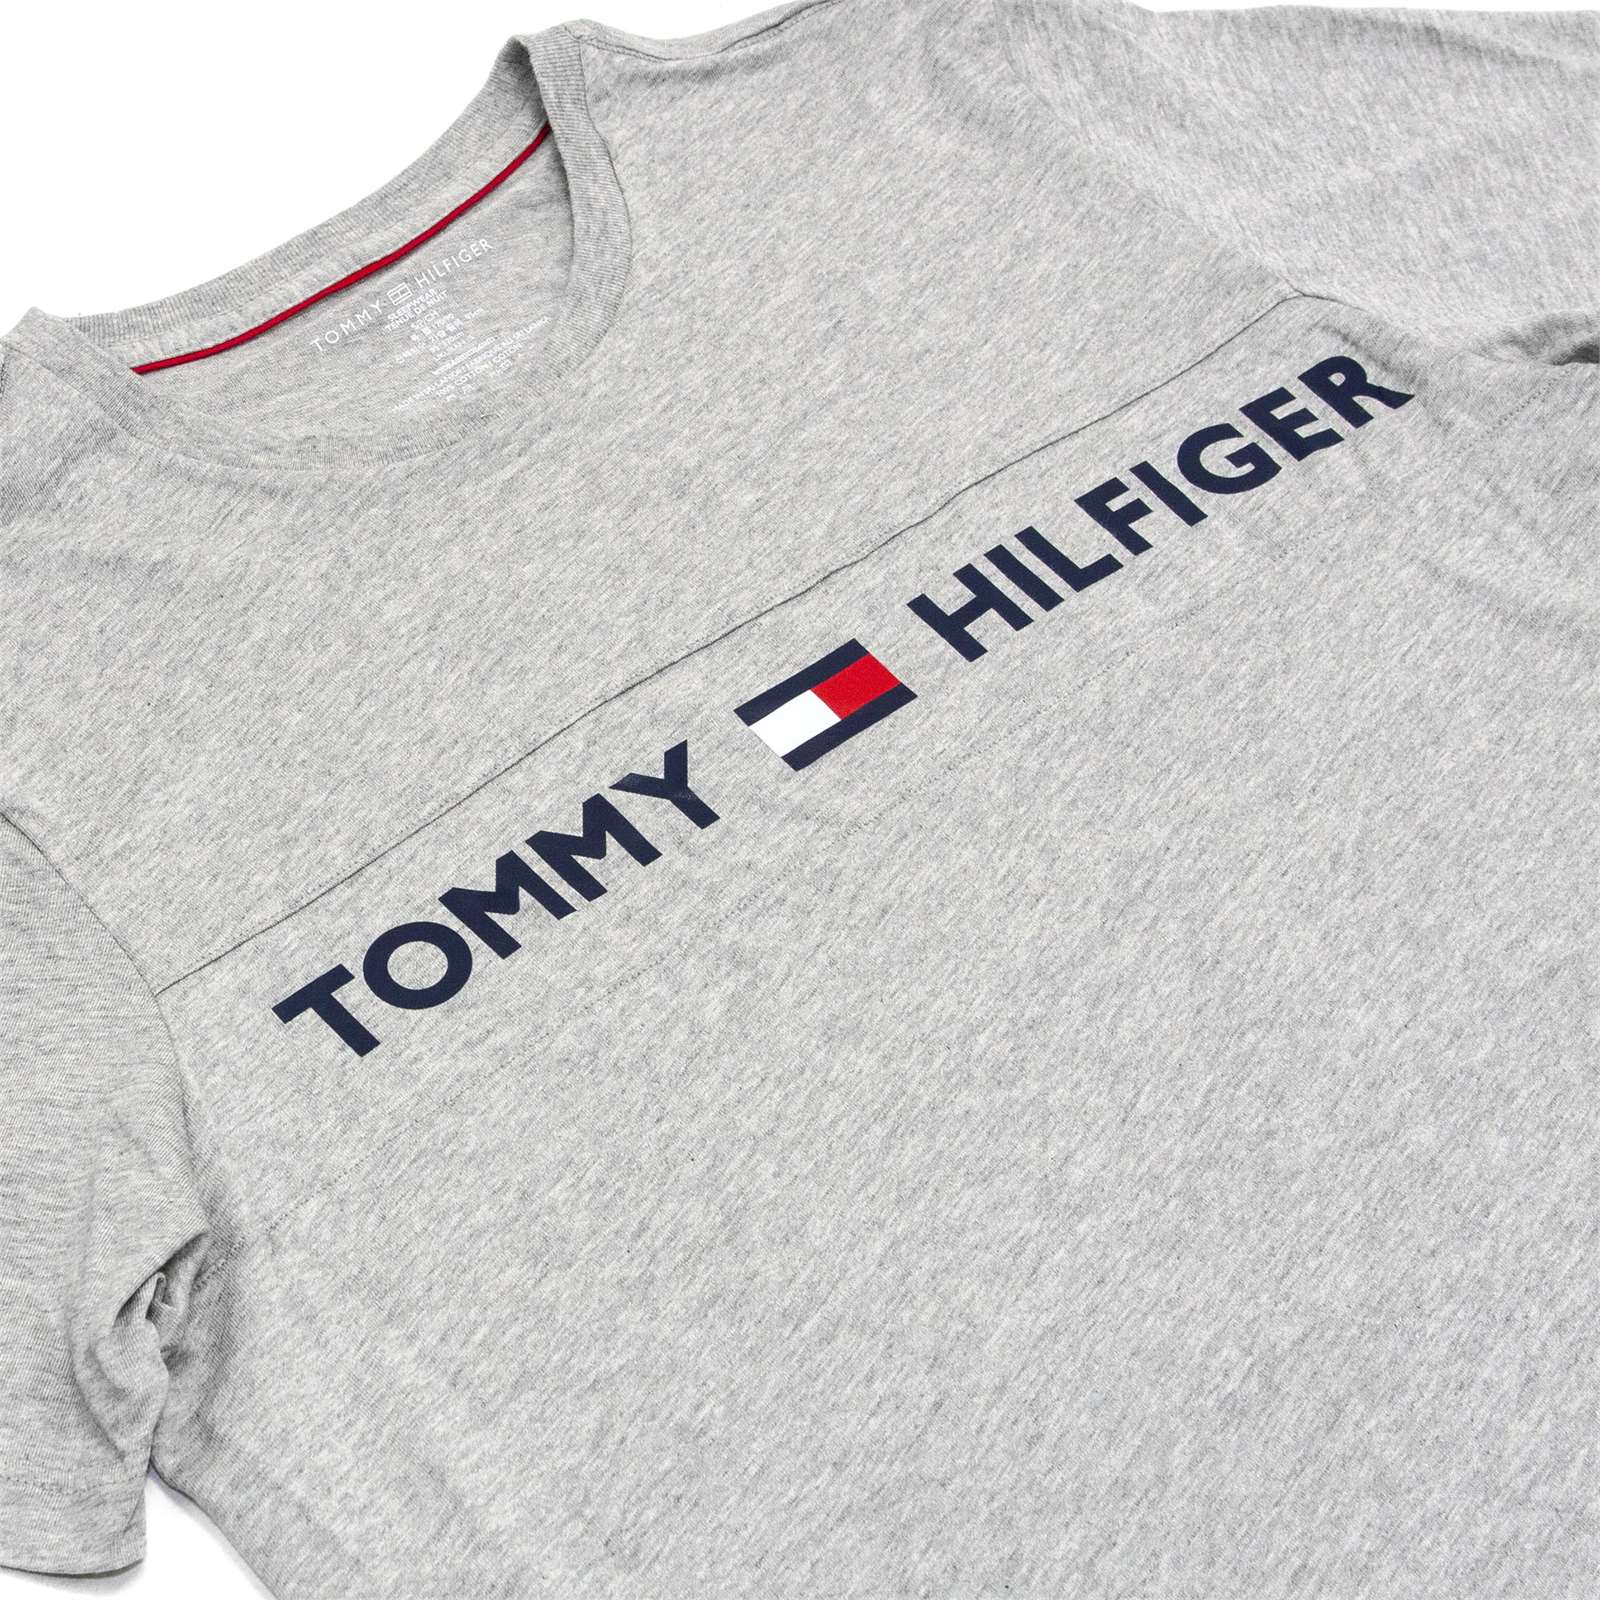 Tommy Hilfiger Men Short Sleeve Logo Tee